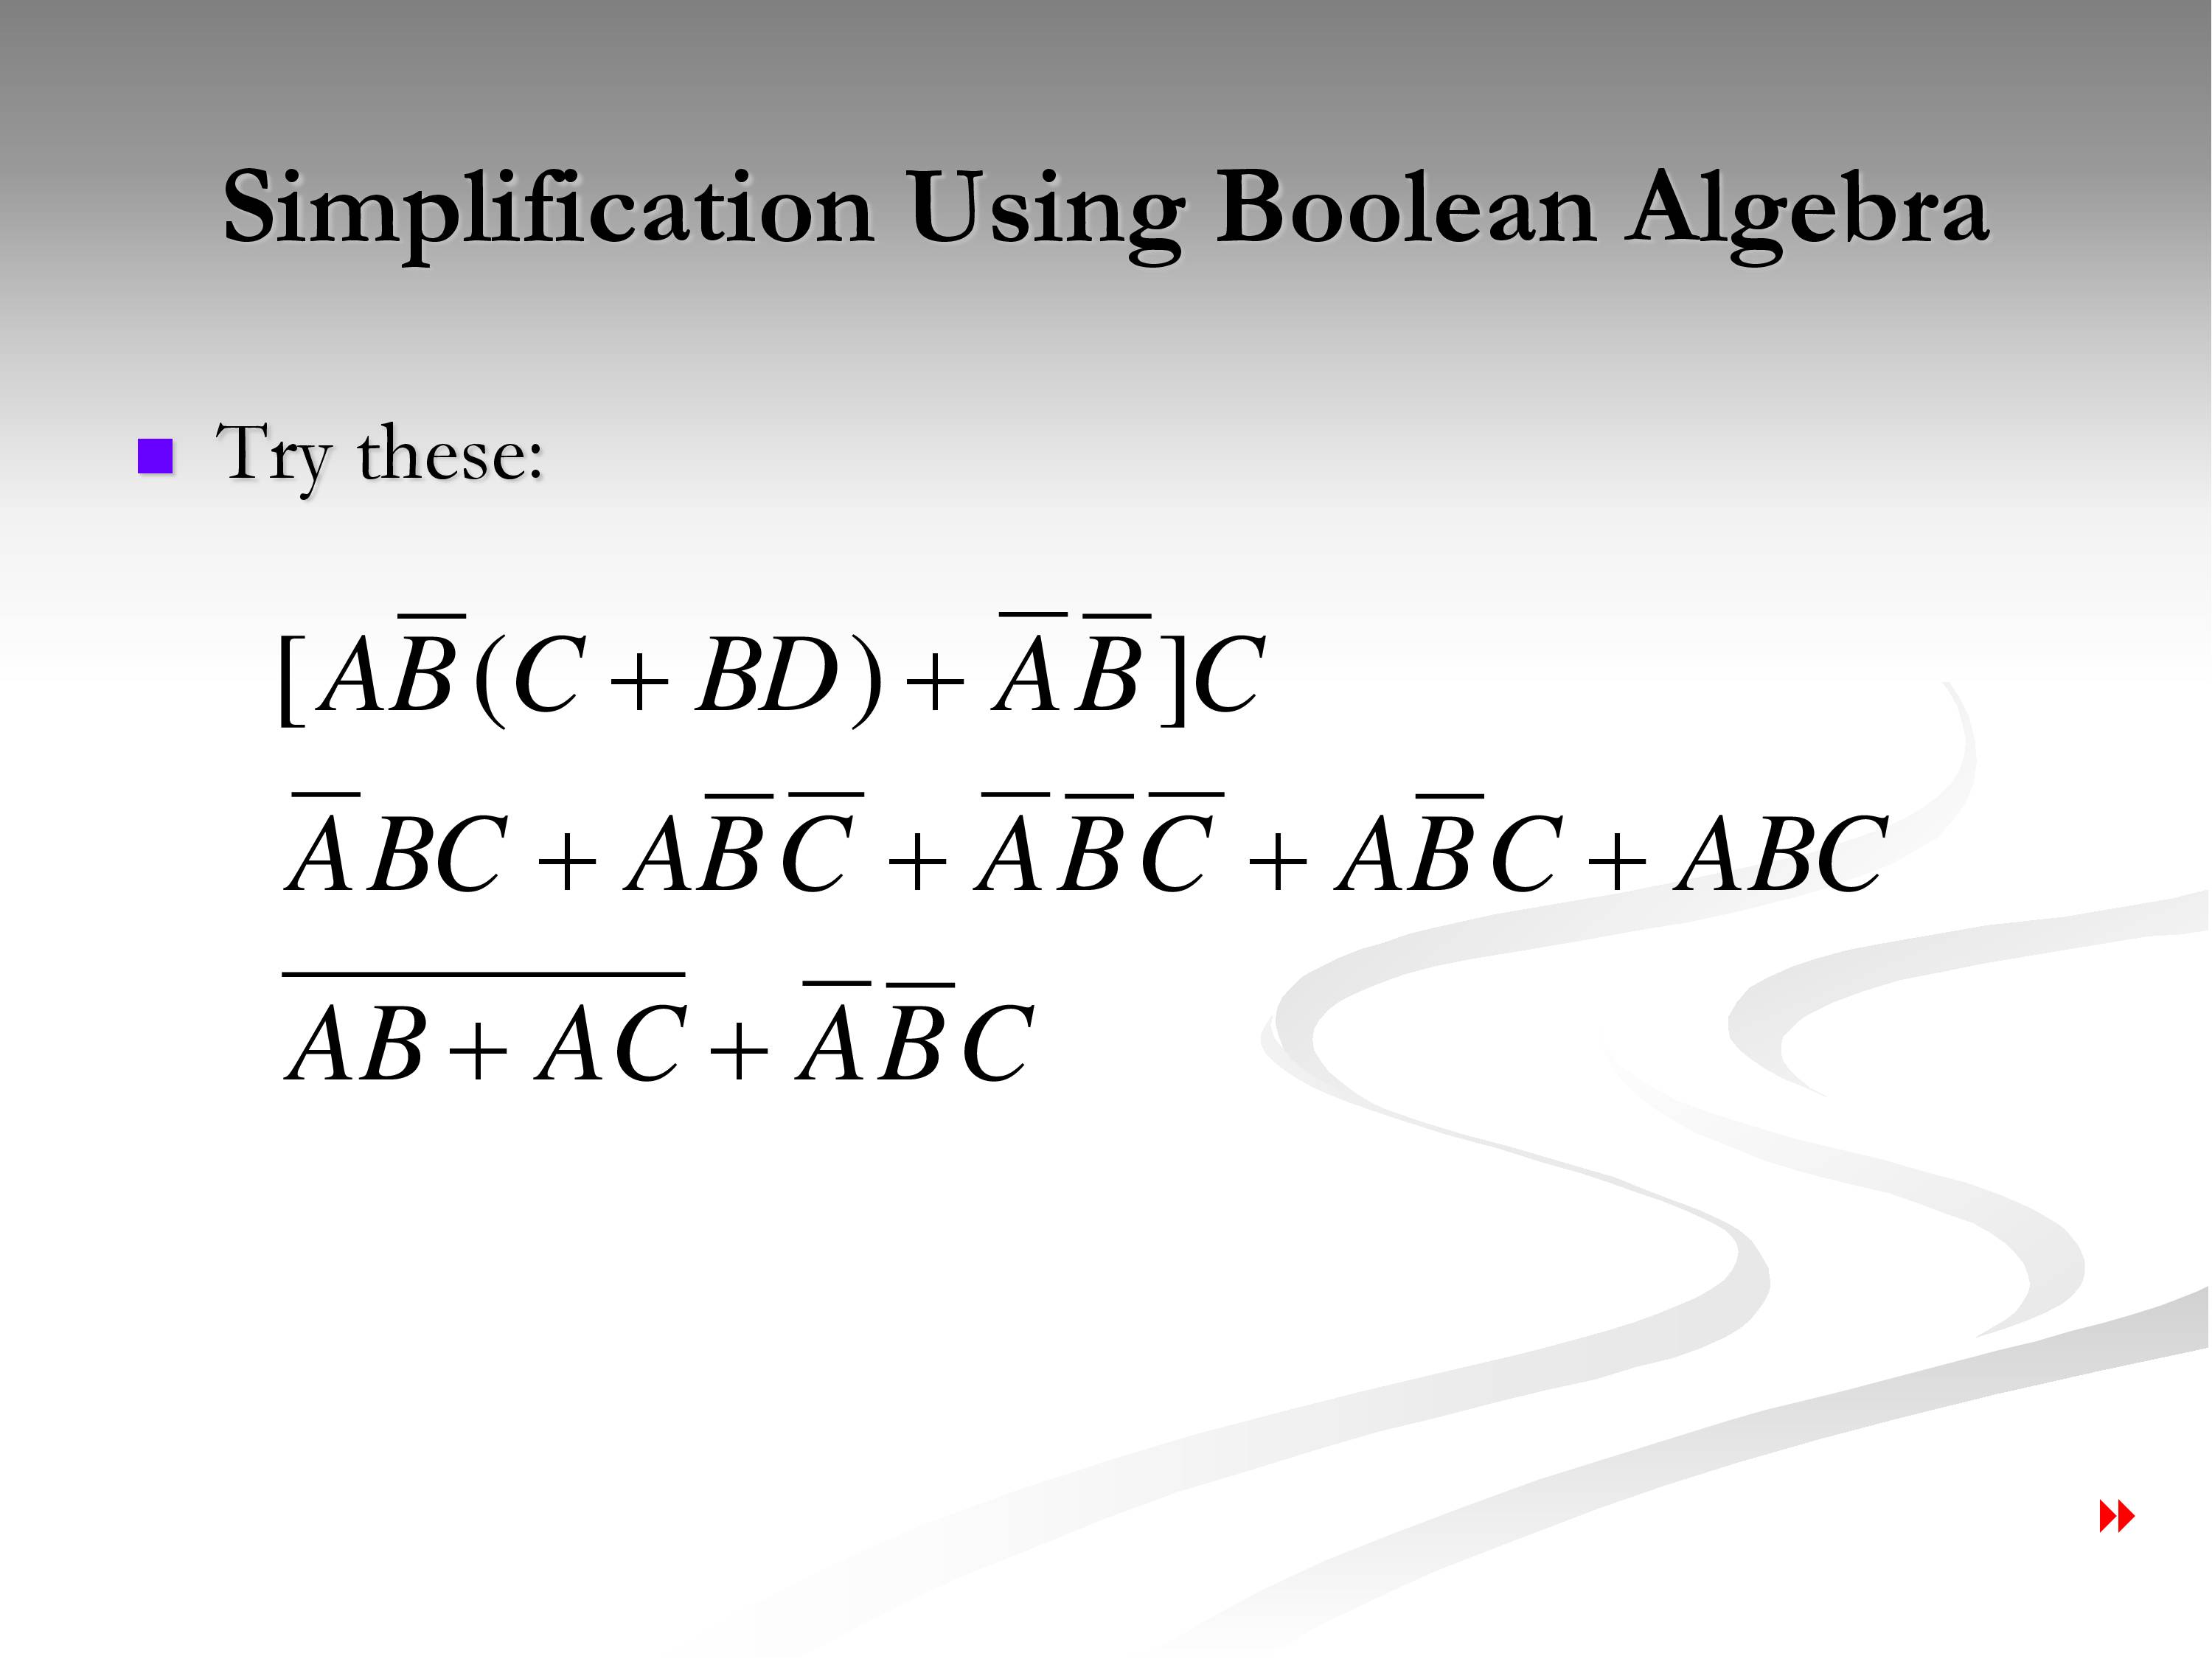 PPT On Simplification Using Boolean Algebra - PowerPoint Slides